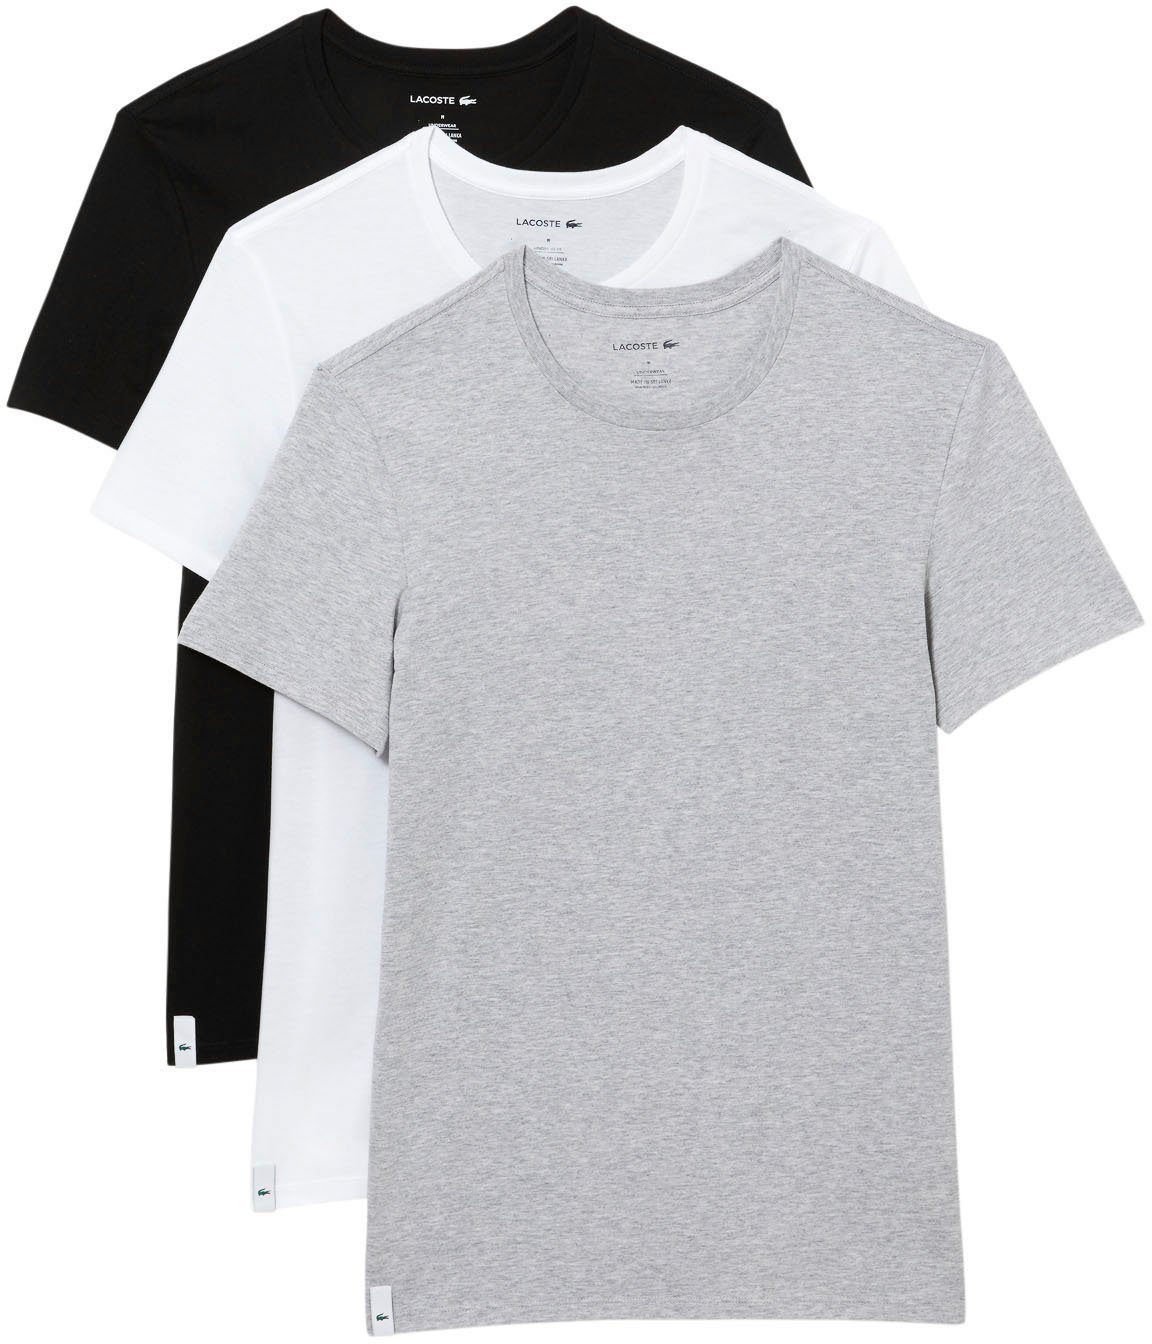 Lacoste T-Shirt (3er-Pack) Atmungsaktives Baumwollmaterial für angenehmes Hautgefühl schwarz weiß grau